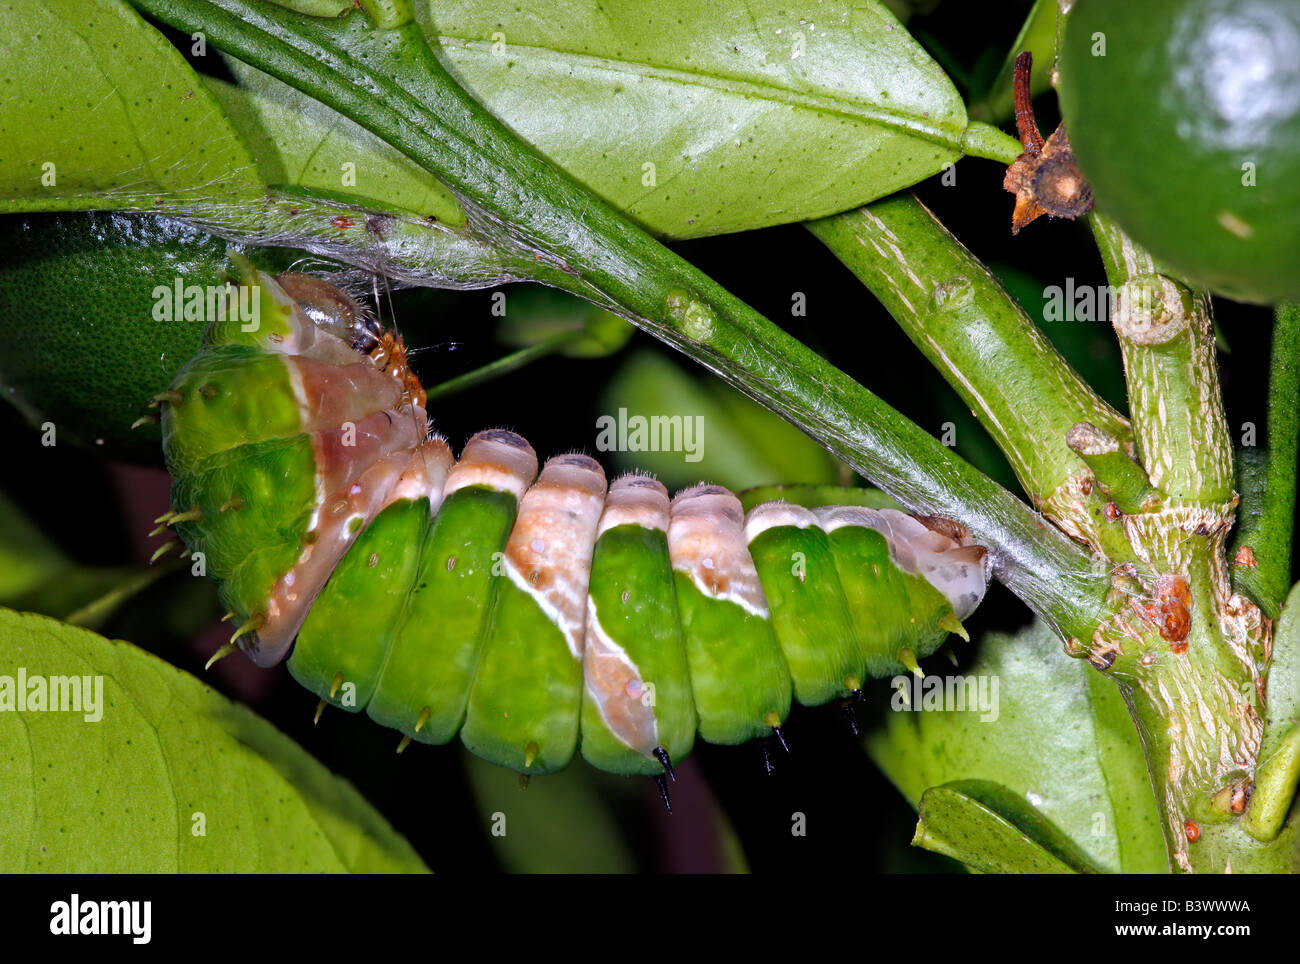 Caterpillar de Orchard especie butterfly (Papilio aegeus) preparando la pupa en un limonero, Australia Foto de stock